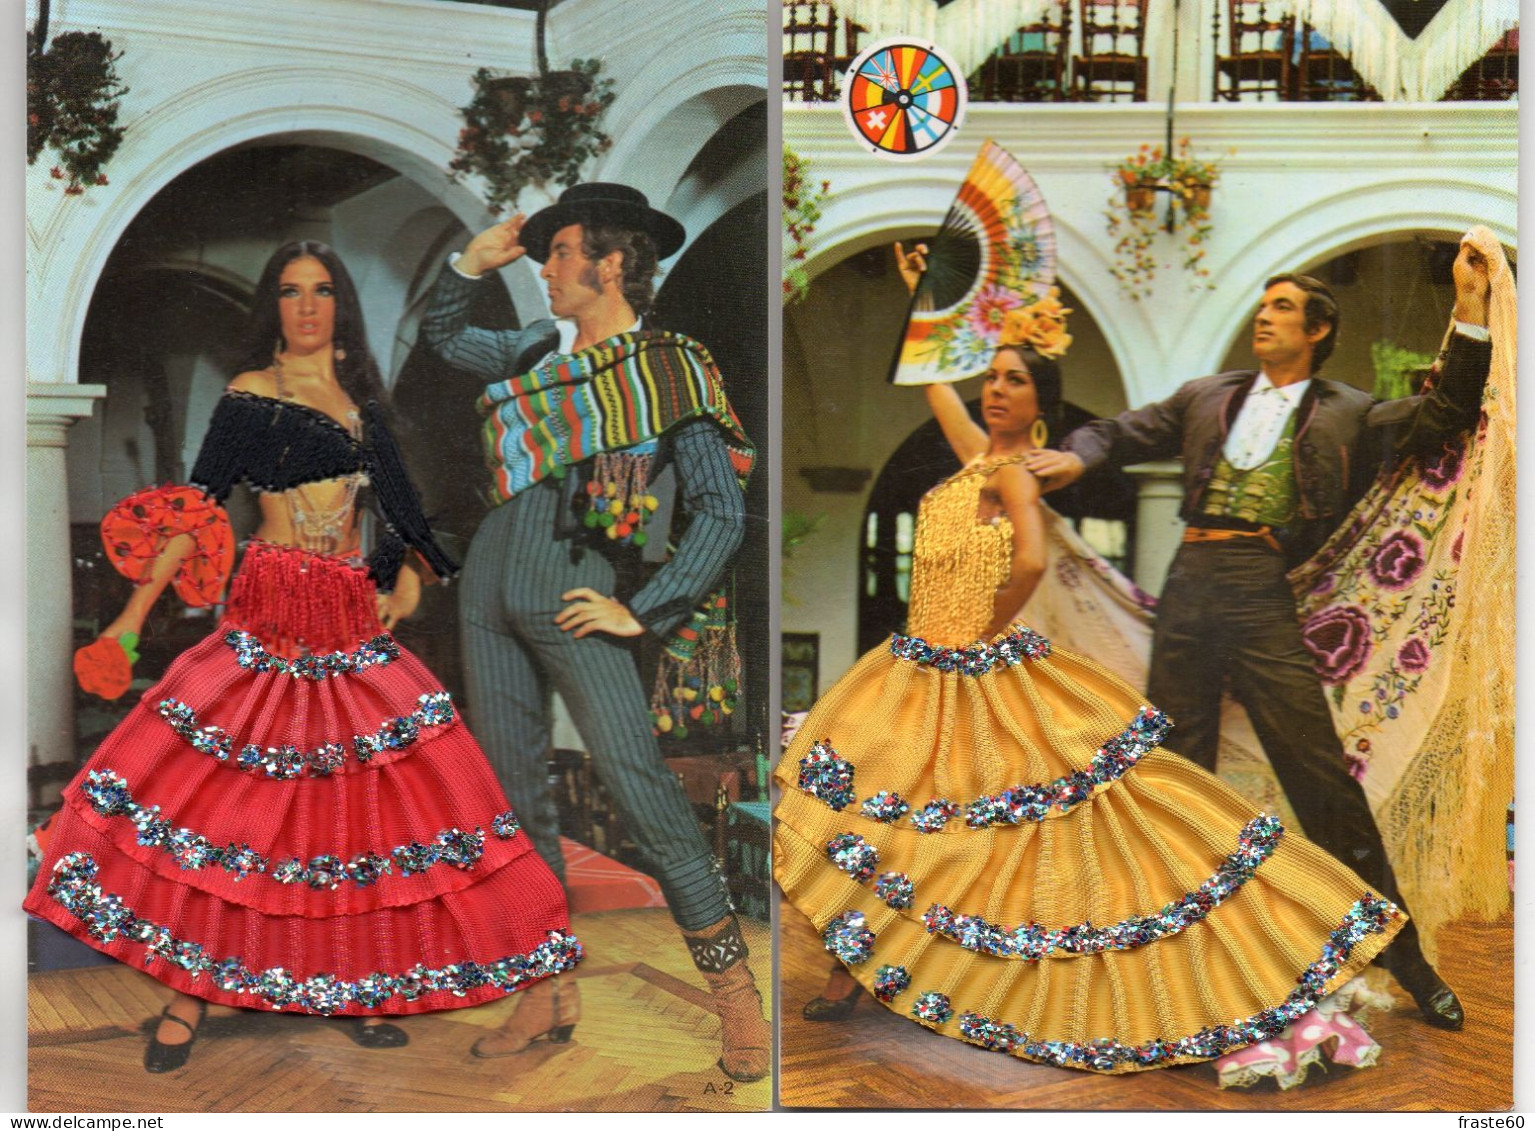 2 Cartes Brodées Danseurs De Flamenco - Bestickt